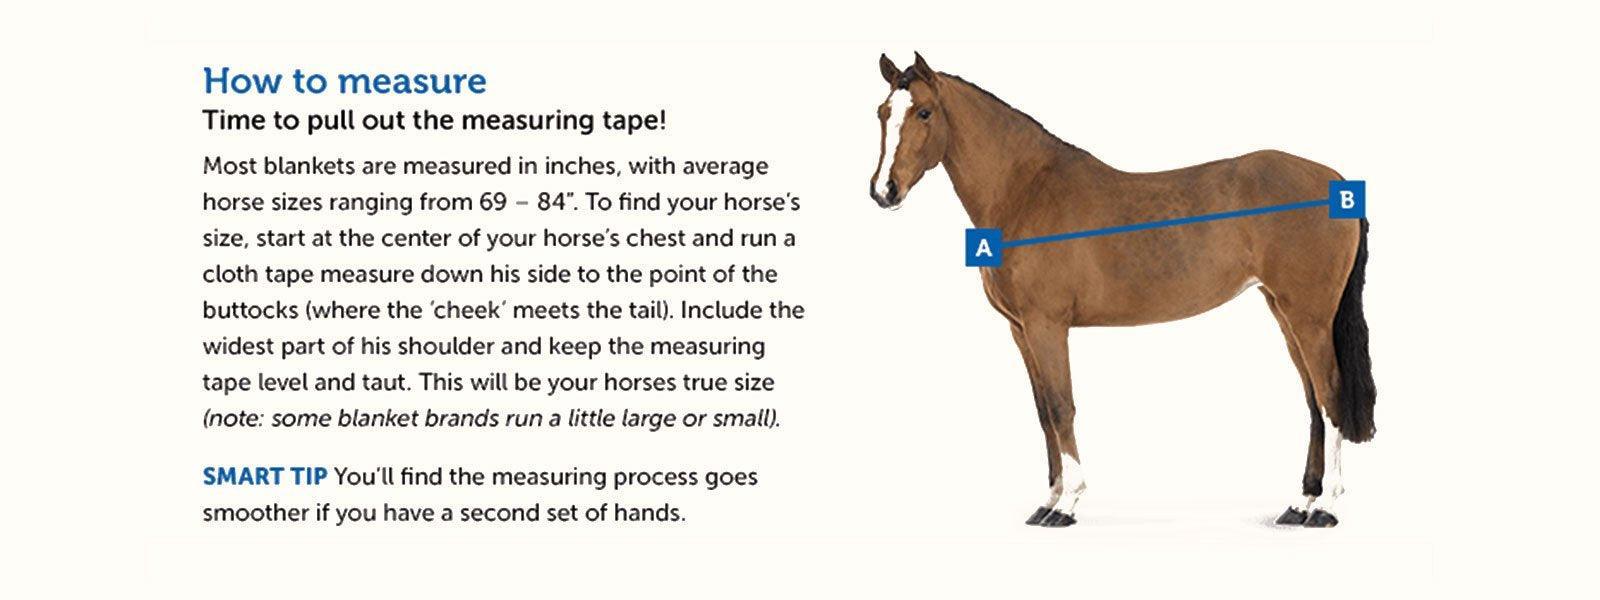 Buy Horse Blanket Leg Straps - Replacement Set at Ubuy Malaysia